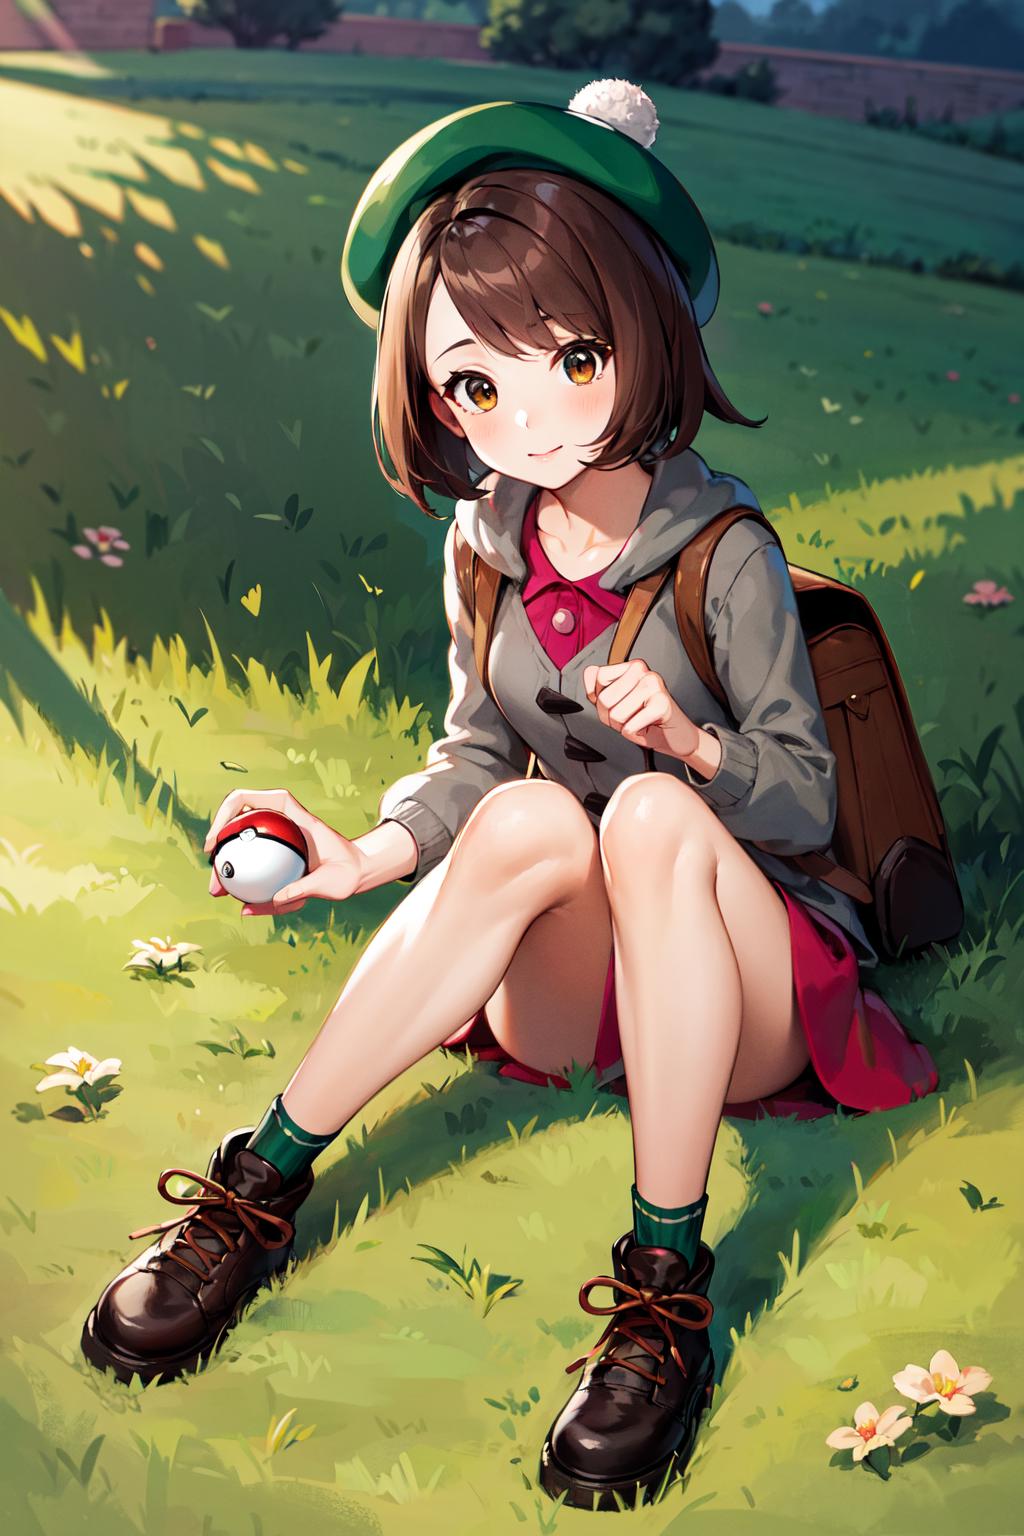 Gloria ユウリ / Pokemon image by h_madoka